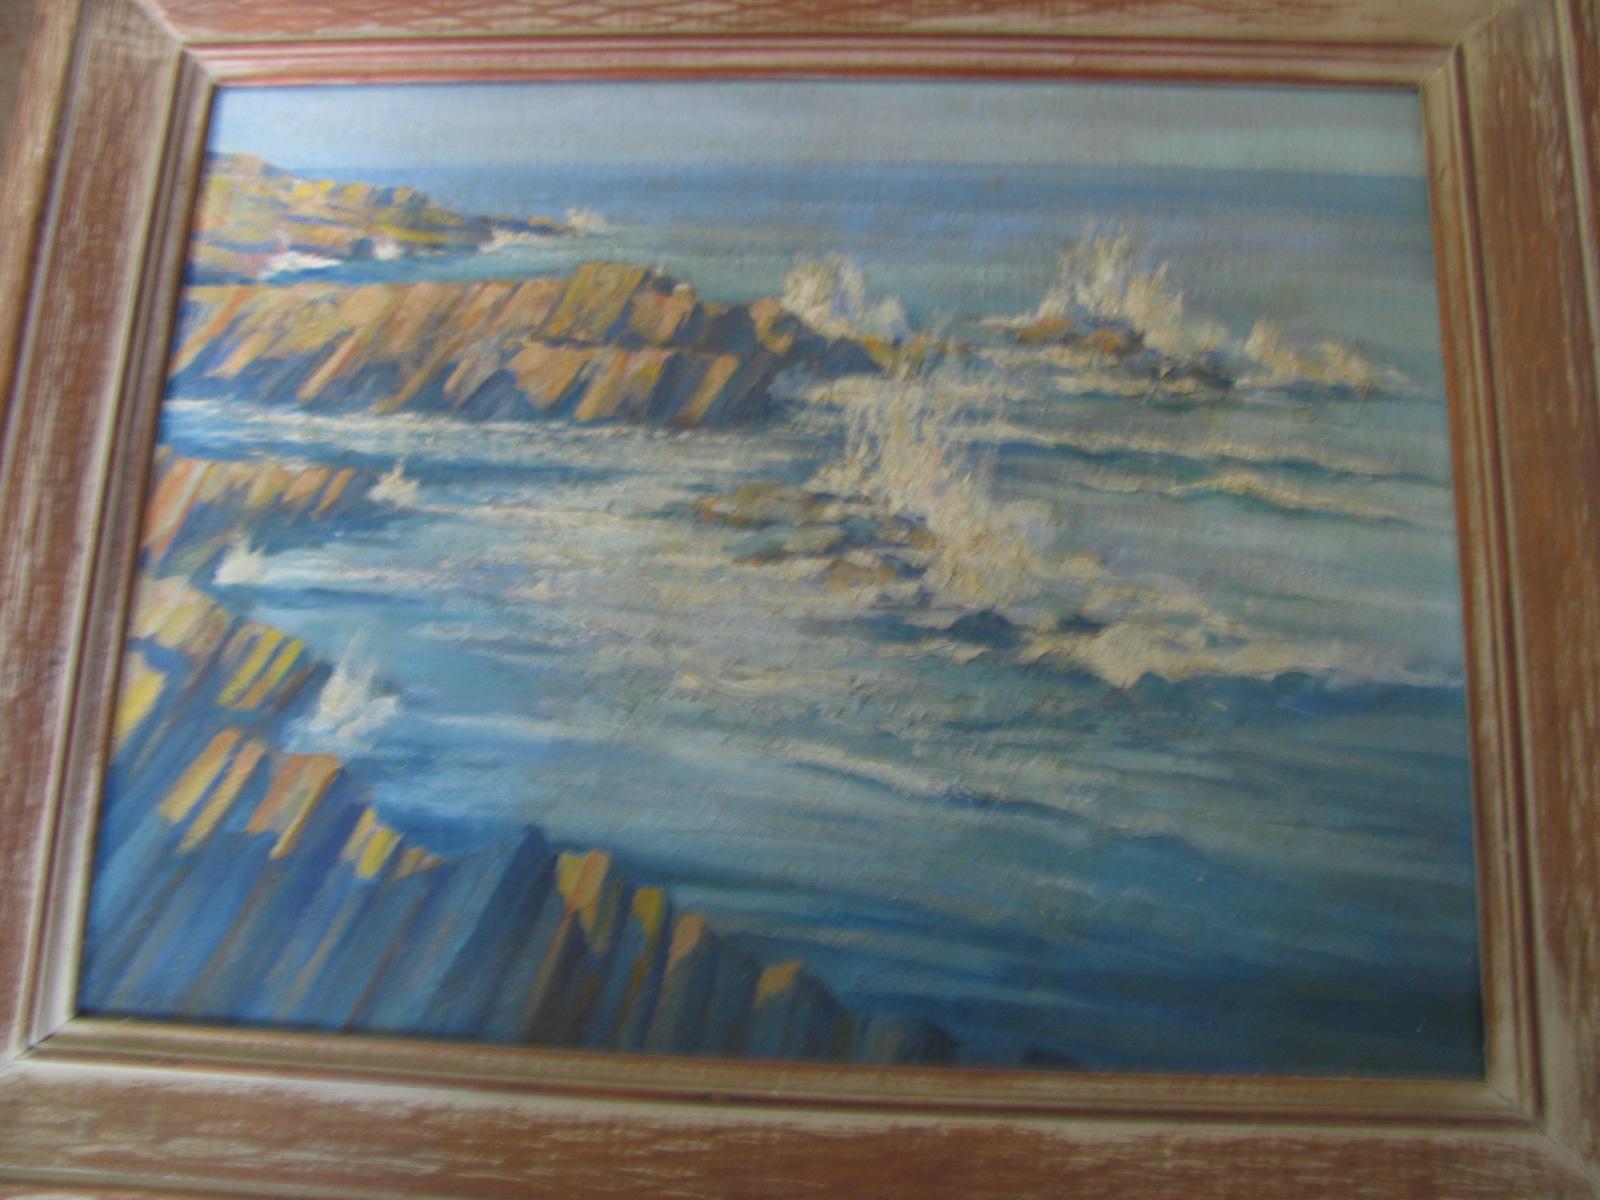 Adirondack Oil on Board Seascape by Maine Artist Charles Andrew Hafner, 1937